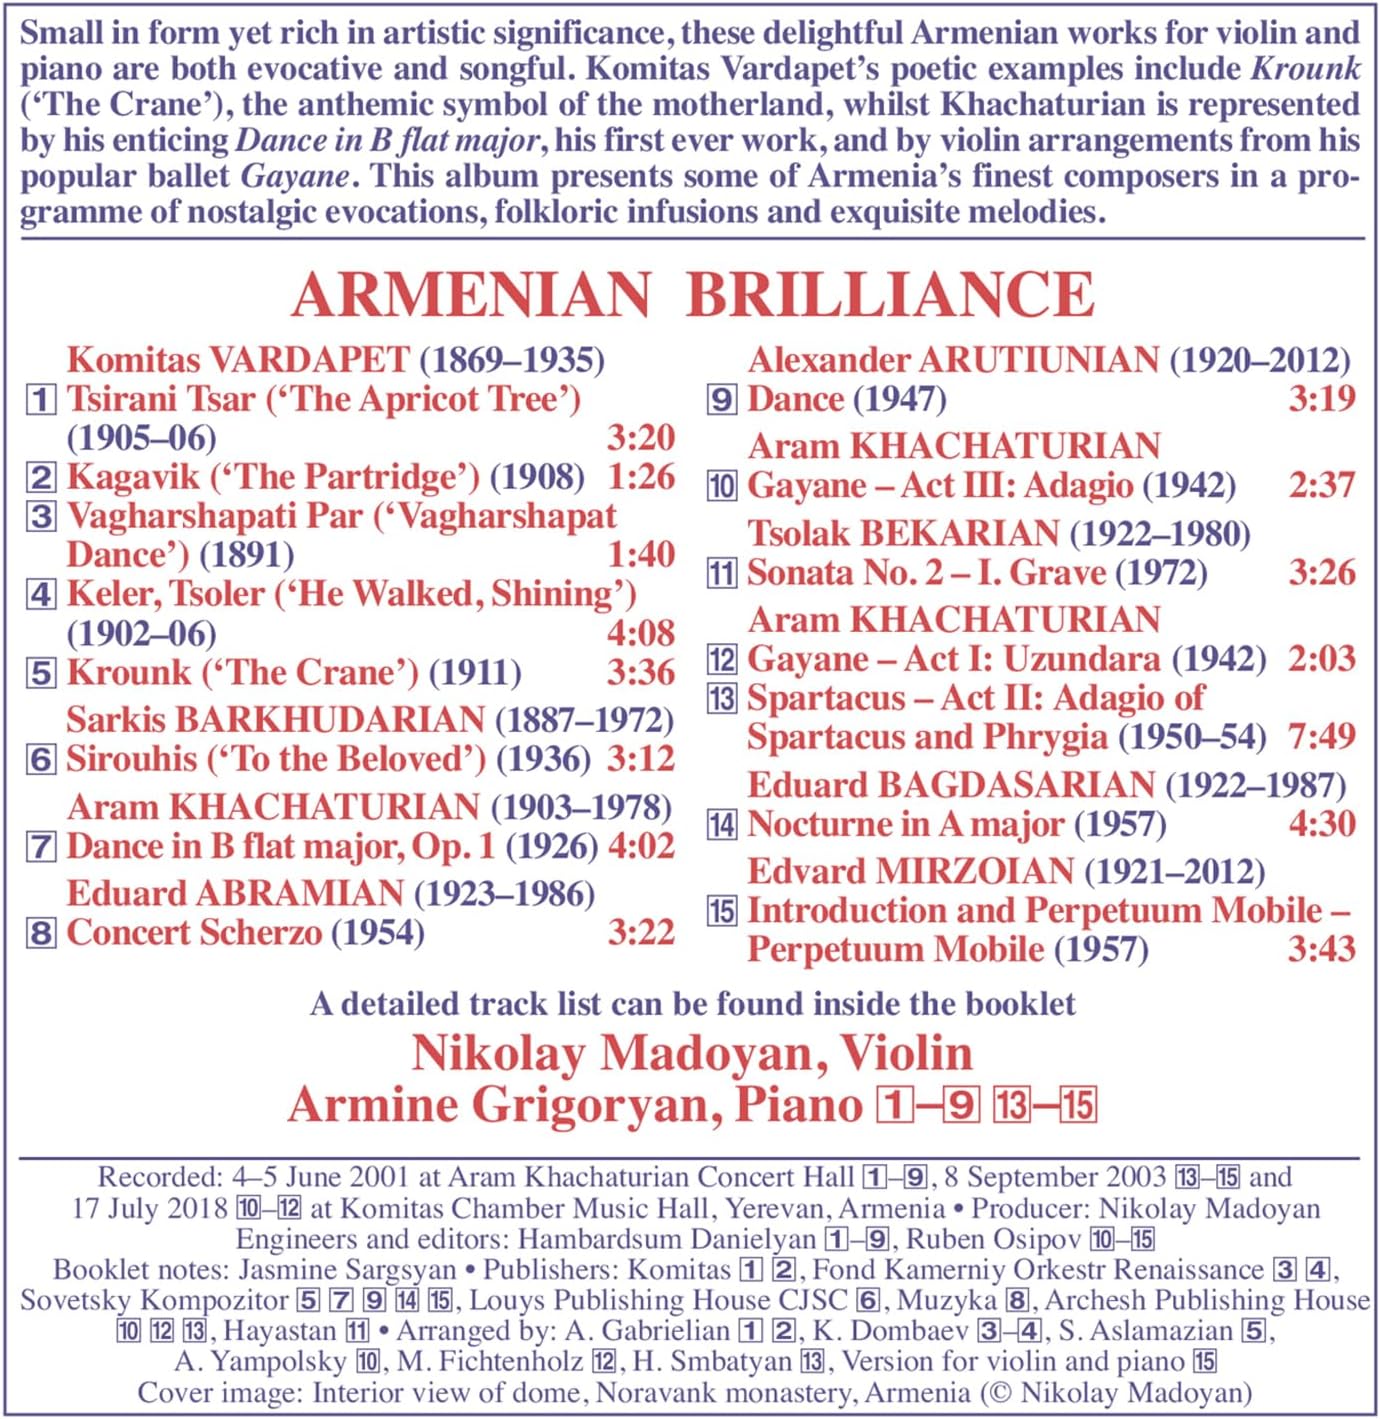 Nikolay Madoyan / Armine Grigoryan 20세기 아르메니아 작곡가들의 바이올린과 피아노를 위한 작품집 (Armenian Brilliance)